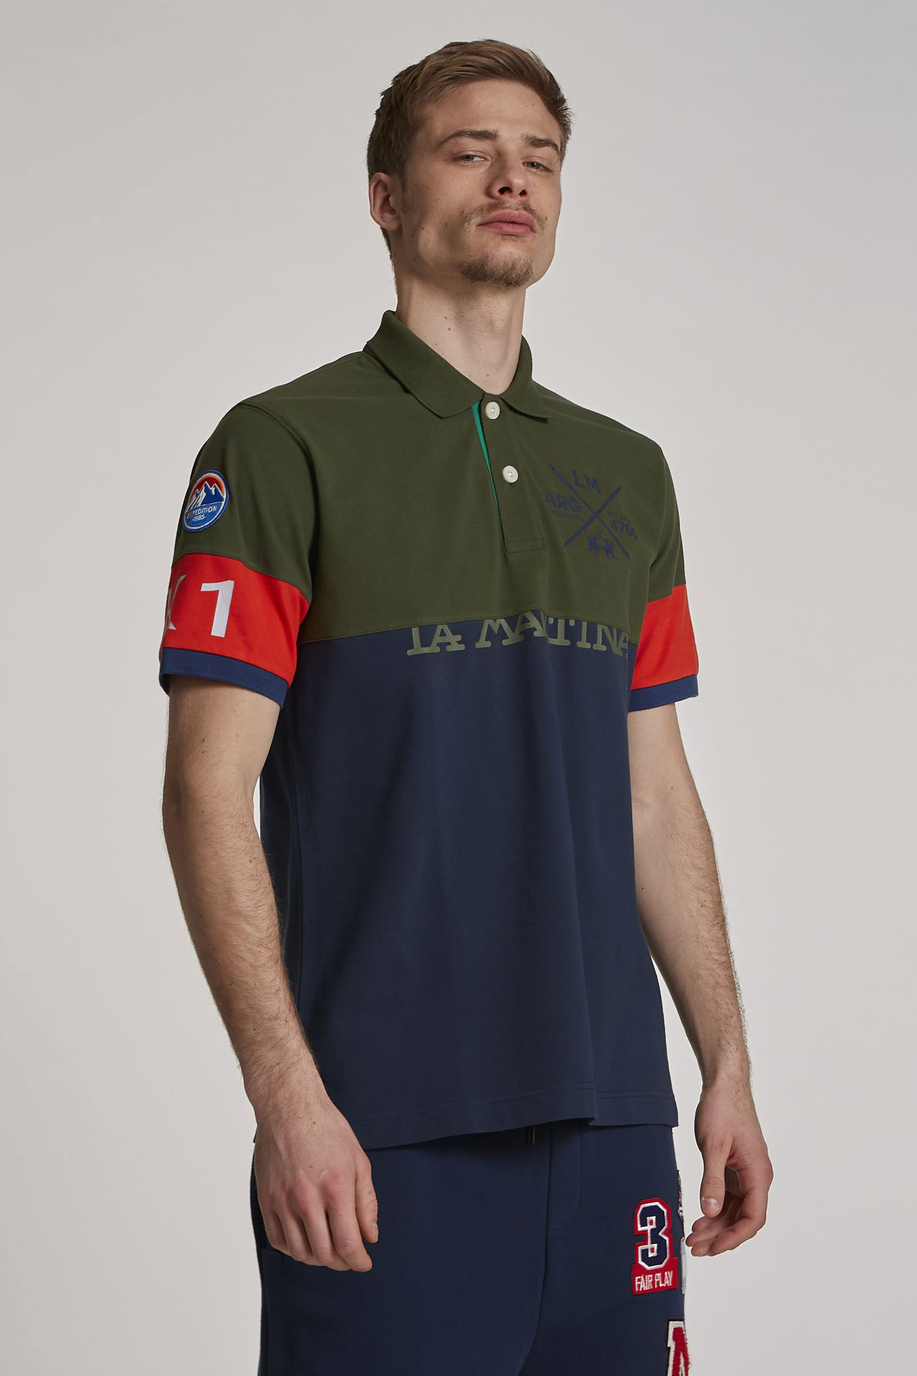 Herren-Poloshirt mit kurzem Arm aus 100 % Baumwolle, oversized Modell - -40% | step 3 | US | La Martina - Official Online Shop